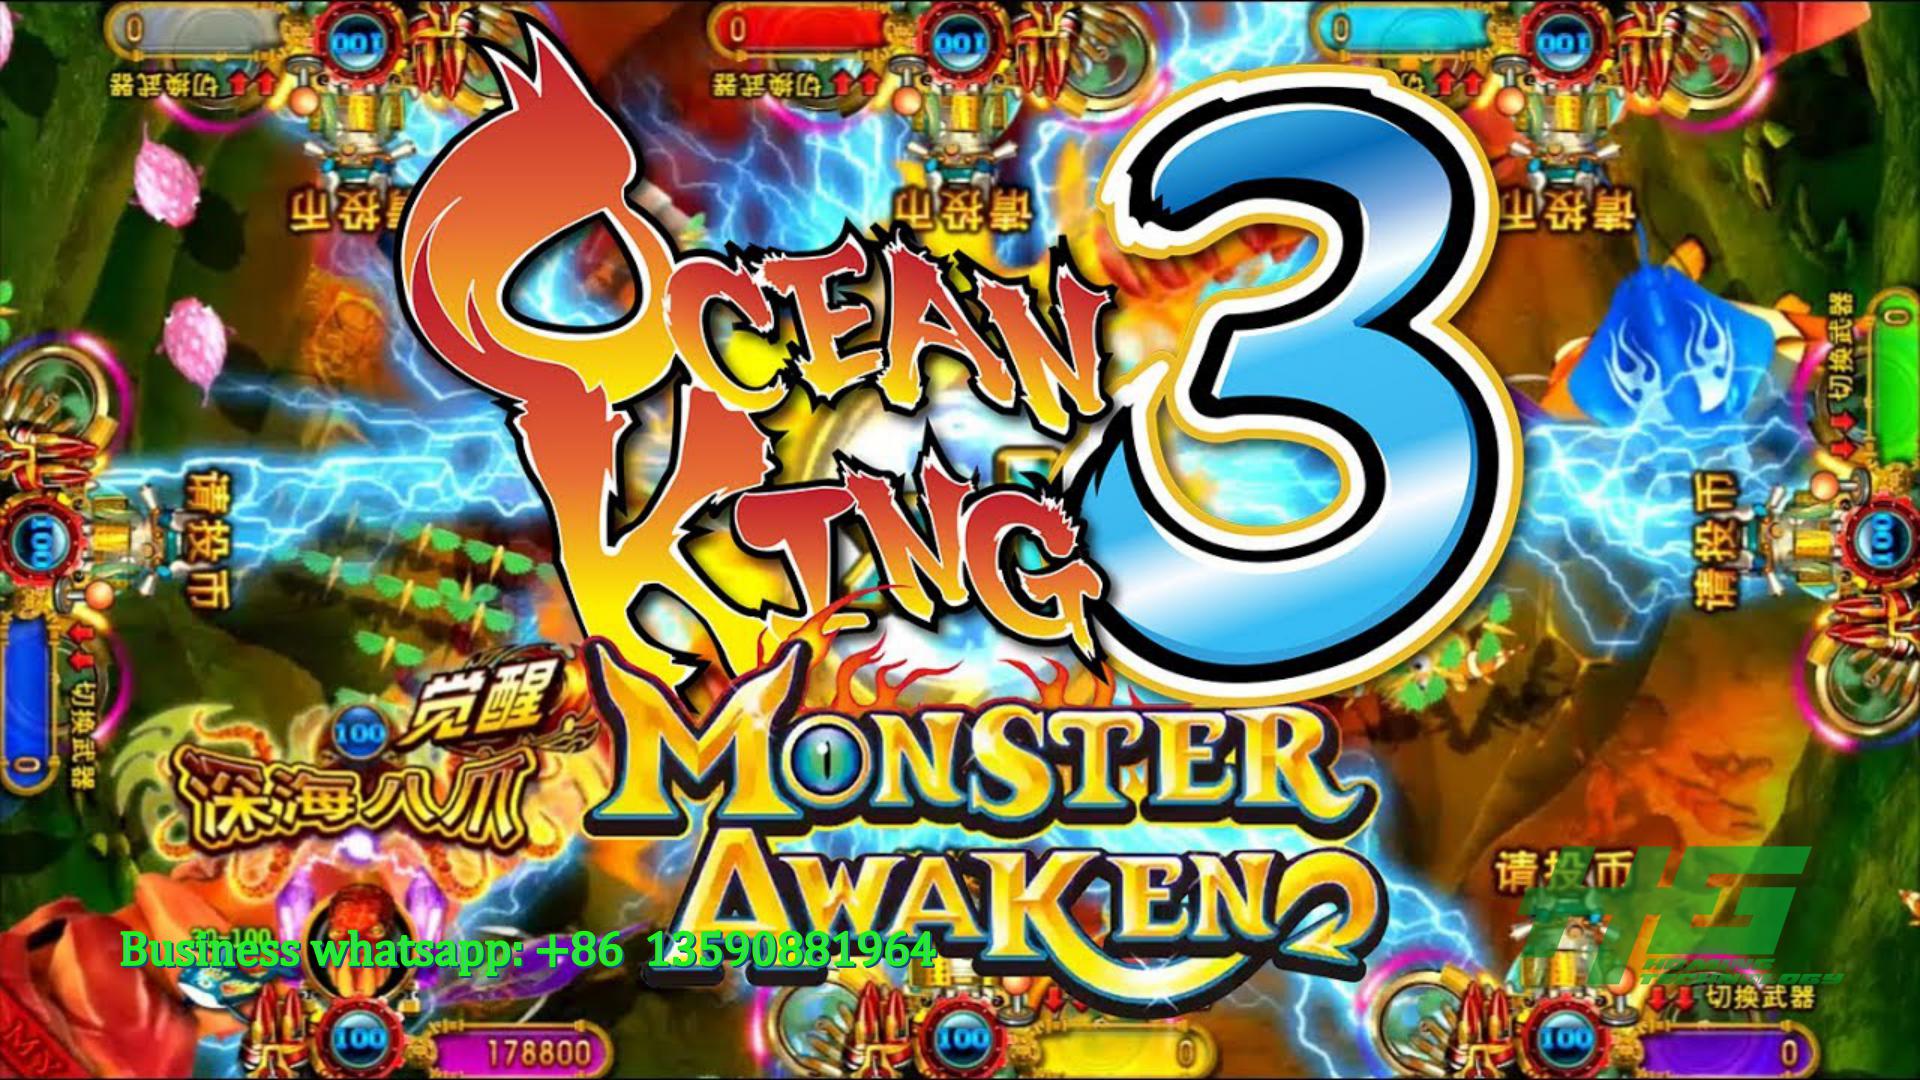 IGS Original Ocean King 3 Monster Awaken,Ocean King 3 Plus Fish Casino Game Machine For Sale 